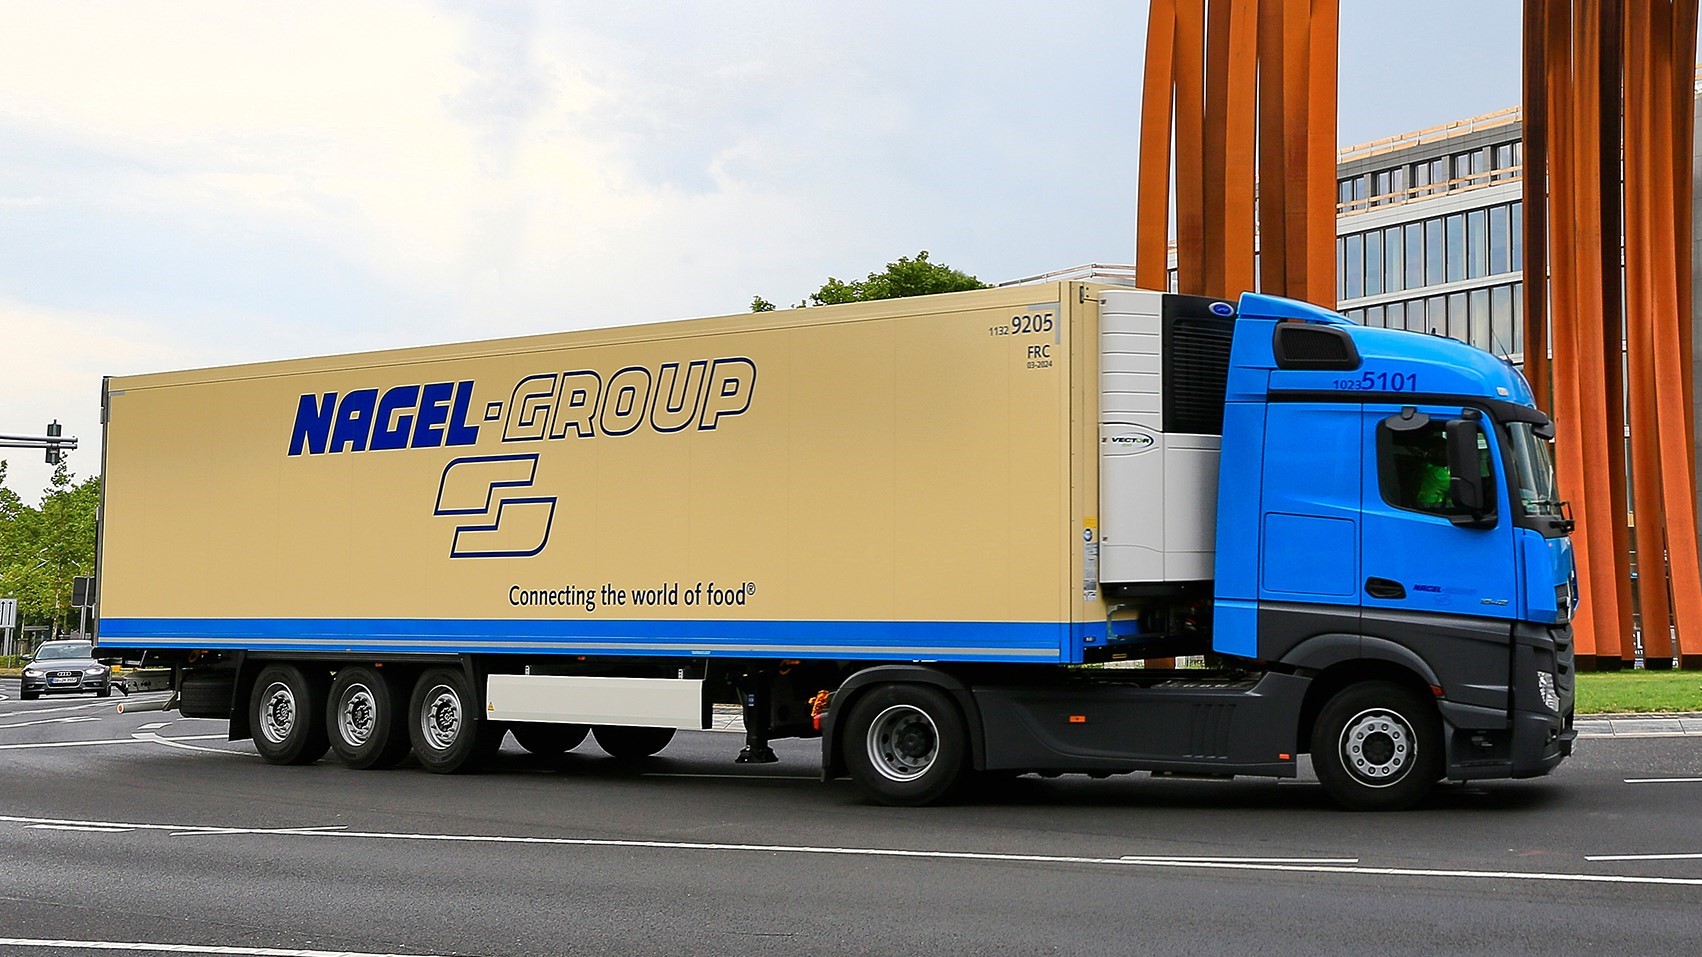 Truck 5  - Nagel Group - © Nagel-Group